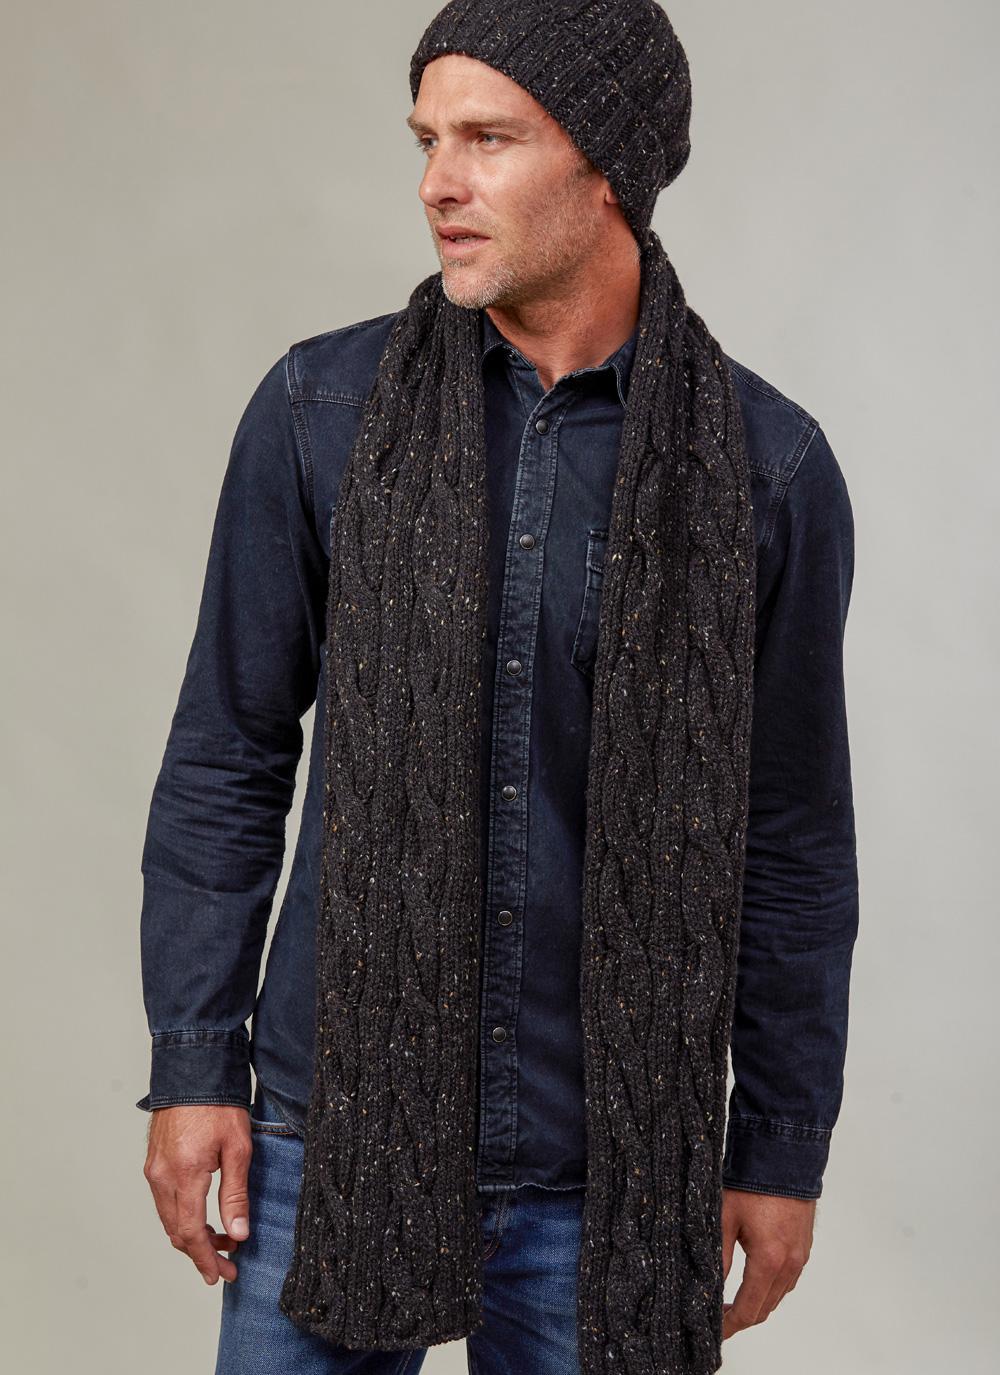 Black wool scarf